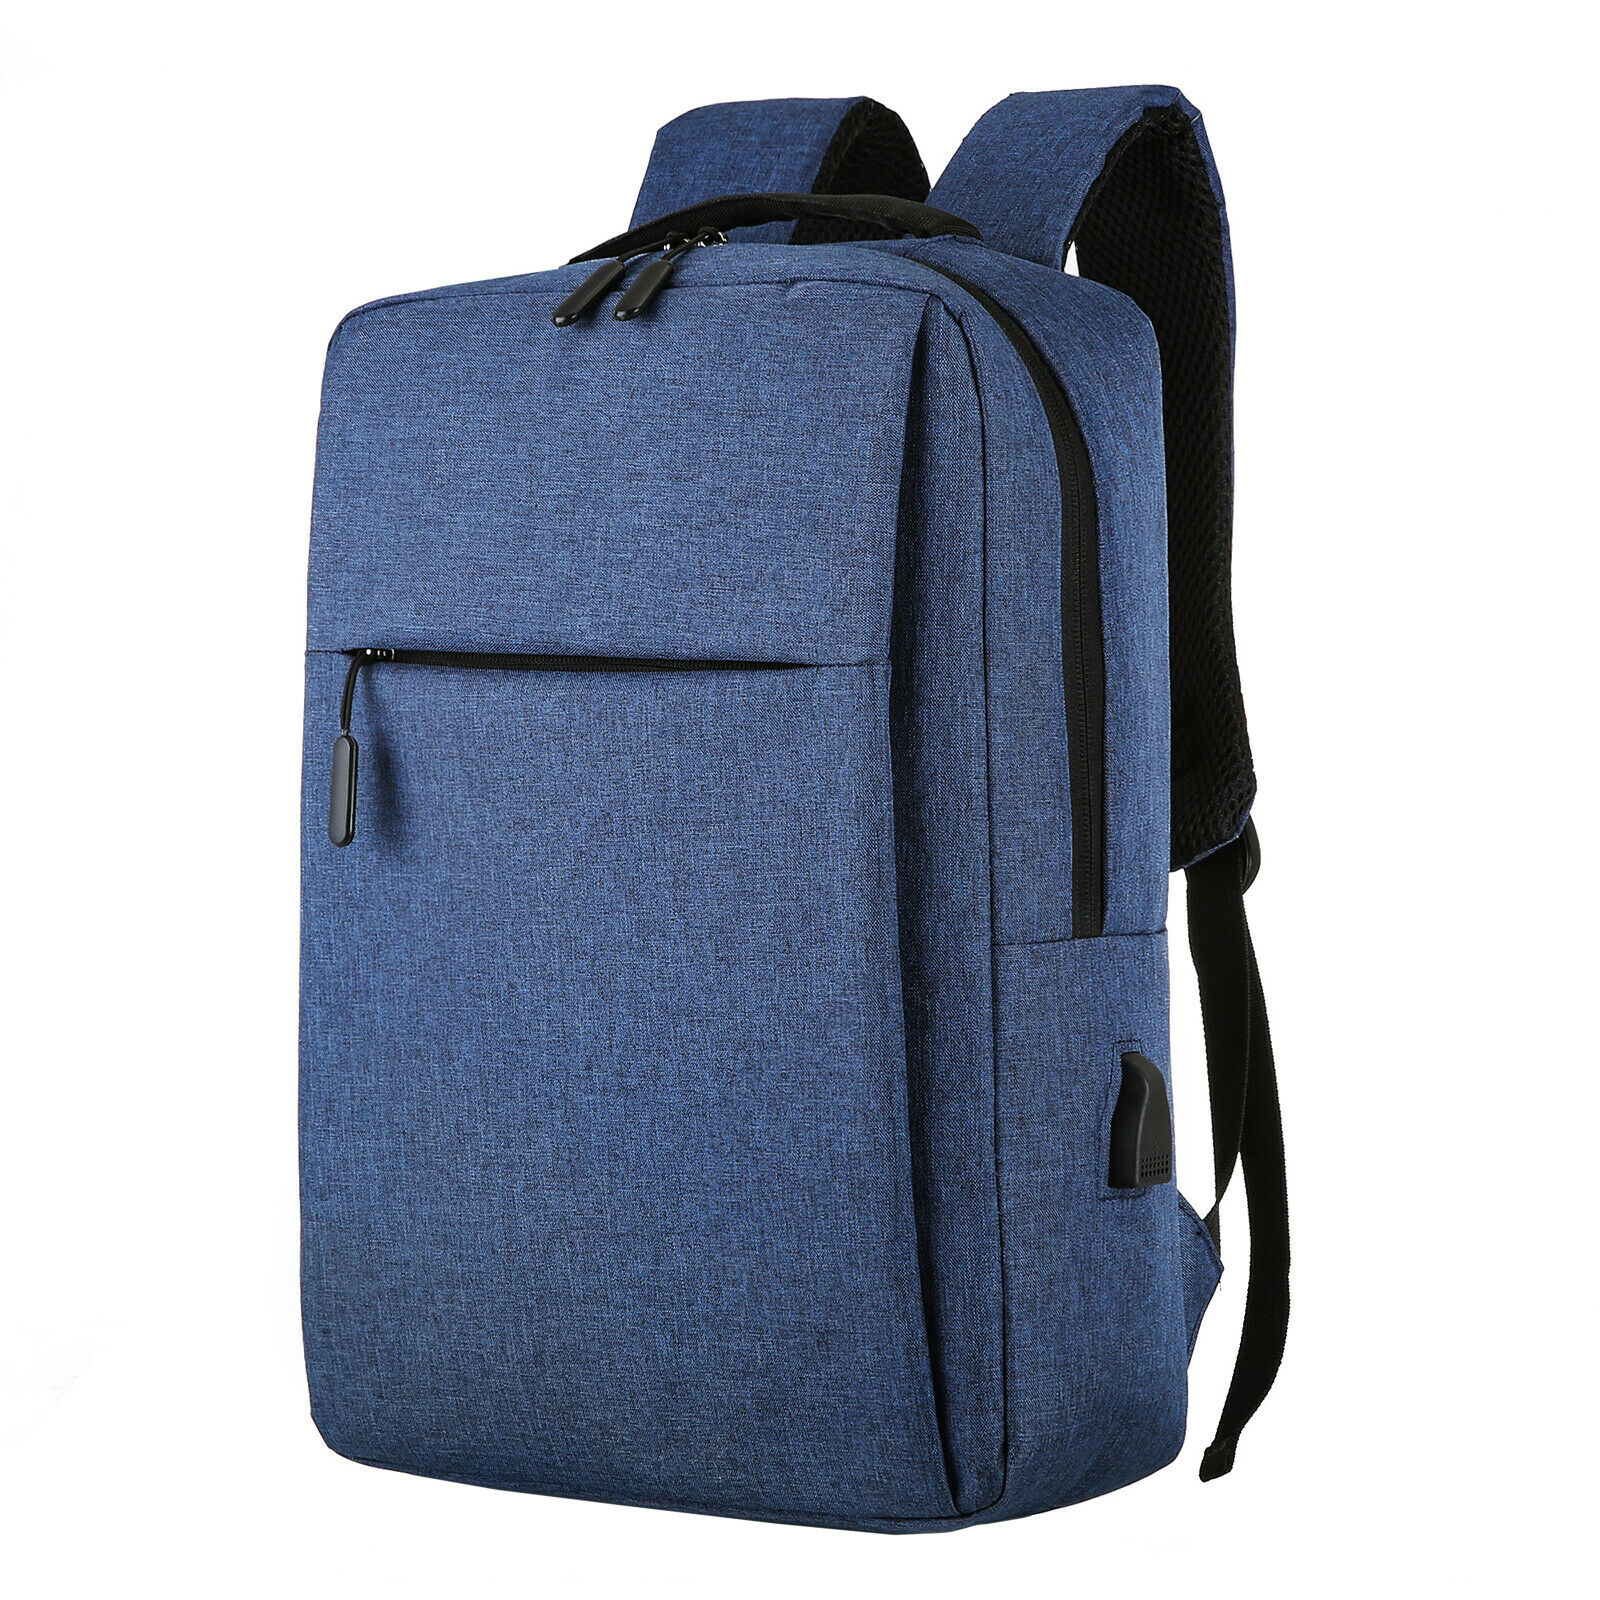 Novaa Bags 16" Slim Casual Waterproof Laptop Backpack with USB Charging Port Navy - image 3 of 6